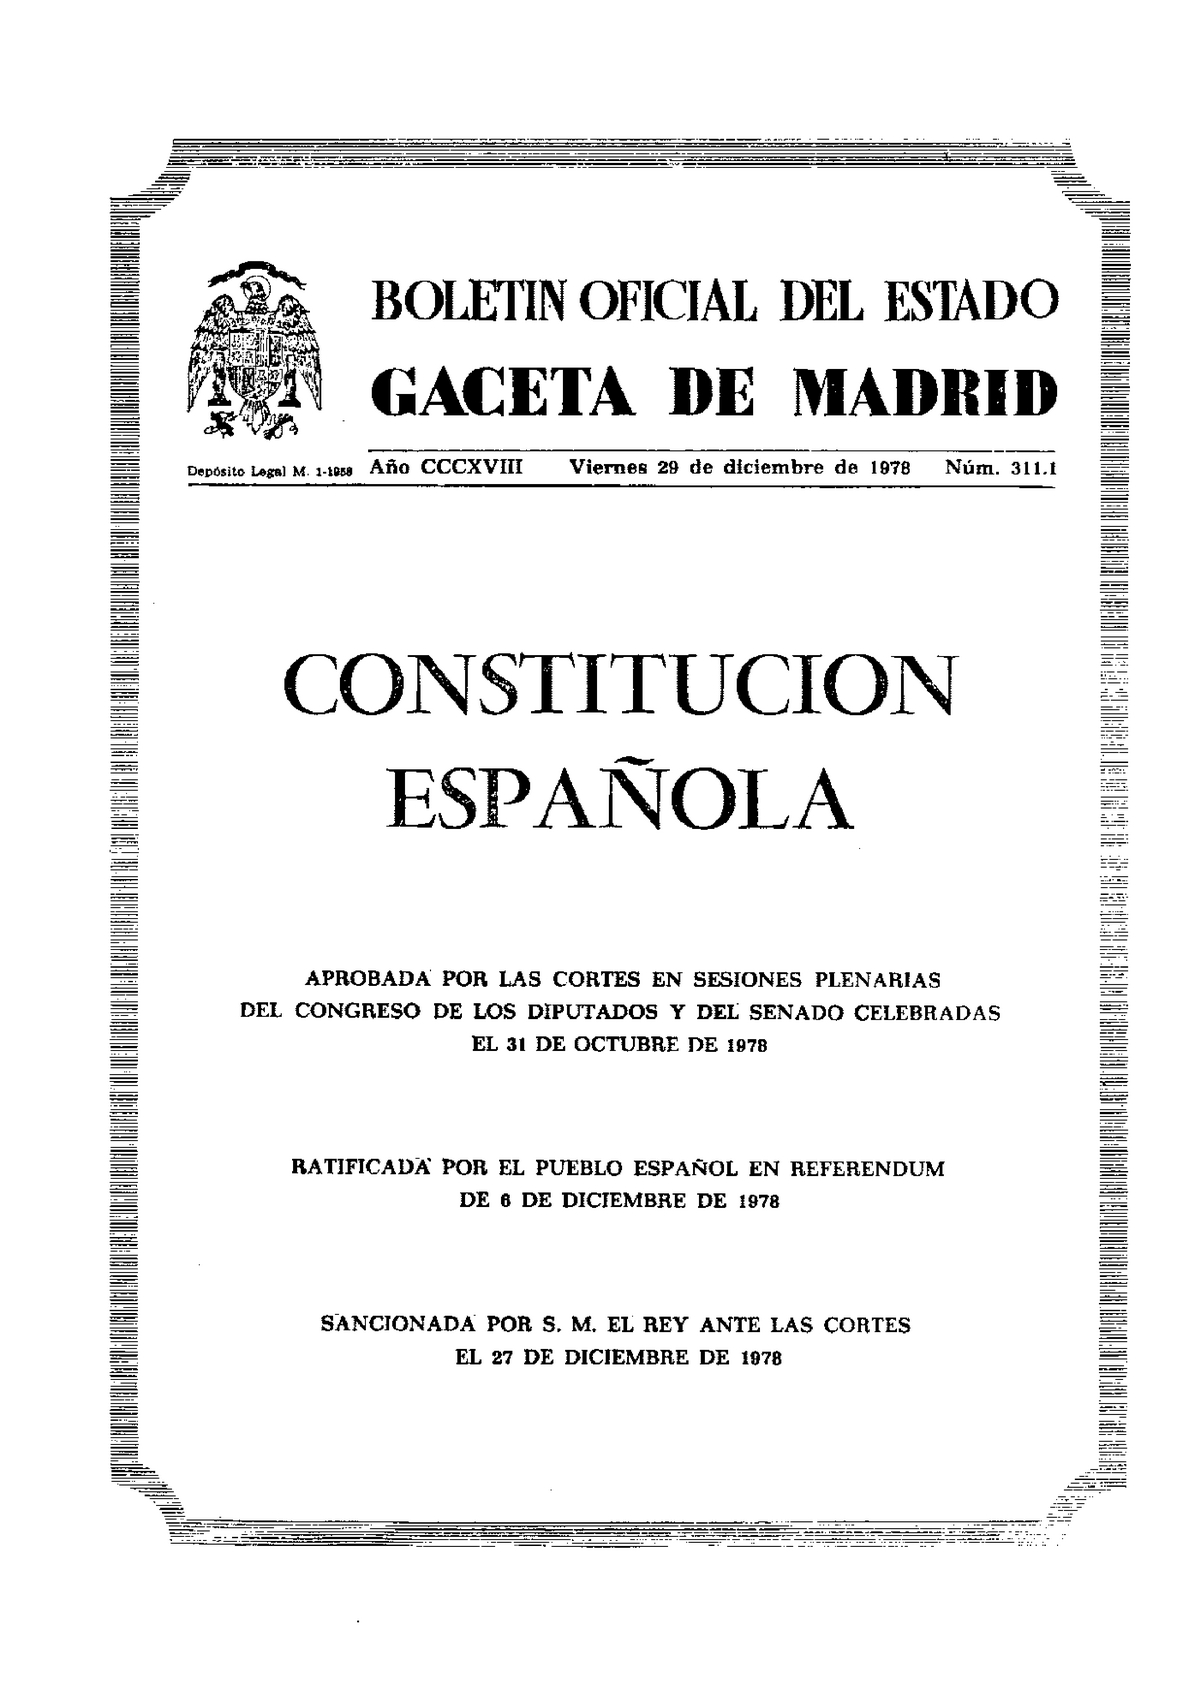 constitucion-espanola-boletin-oficial-del